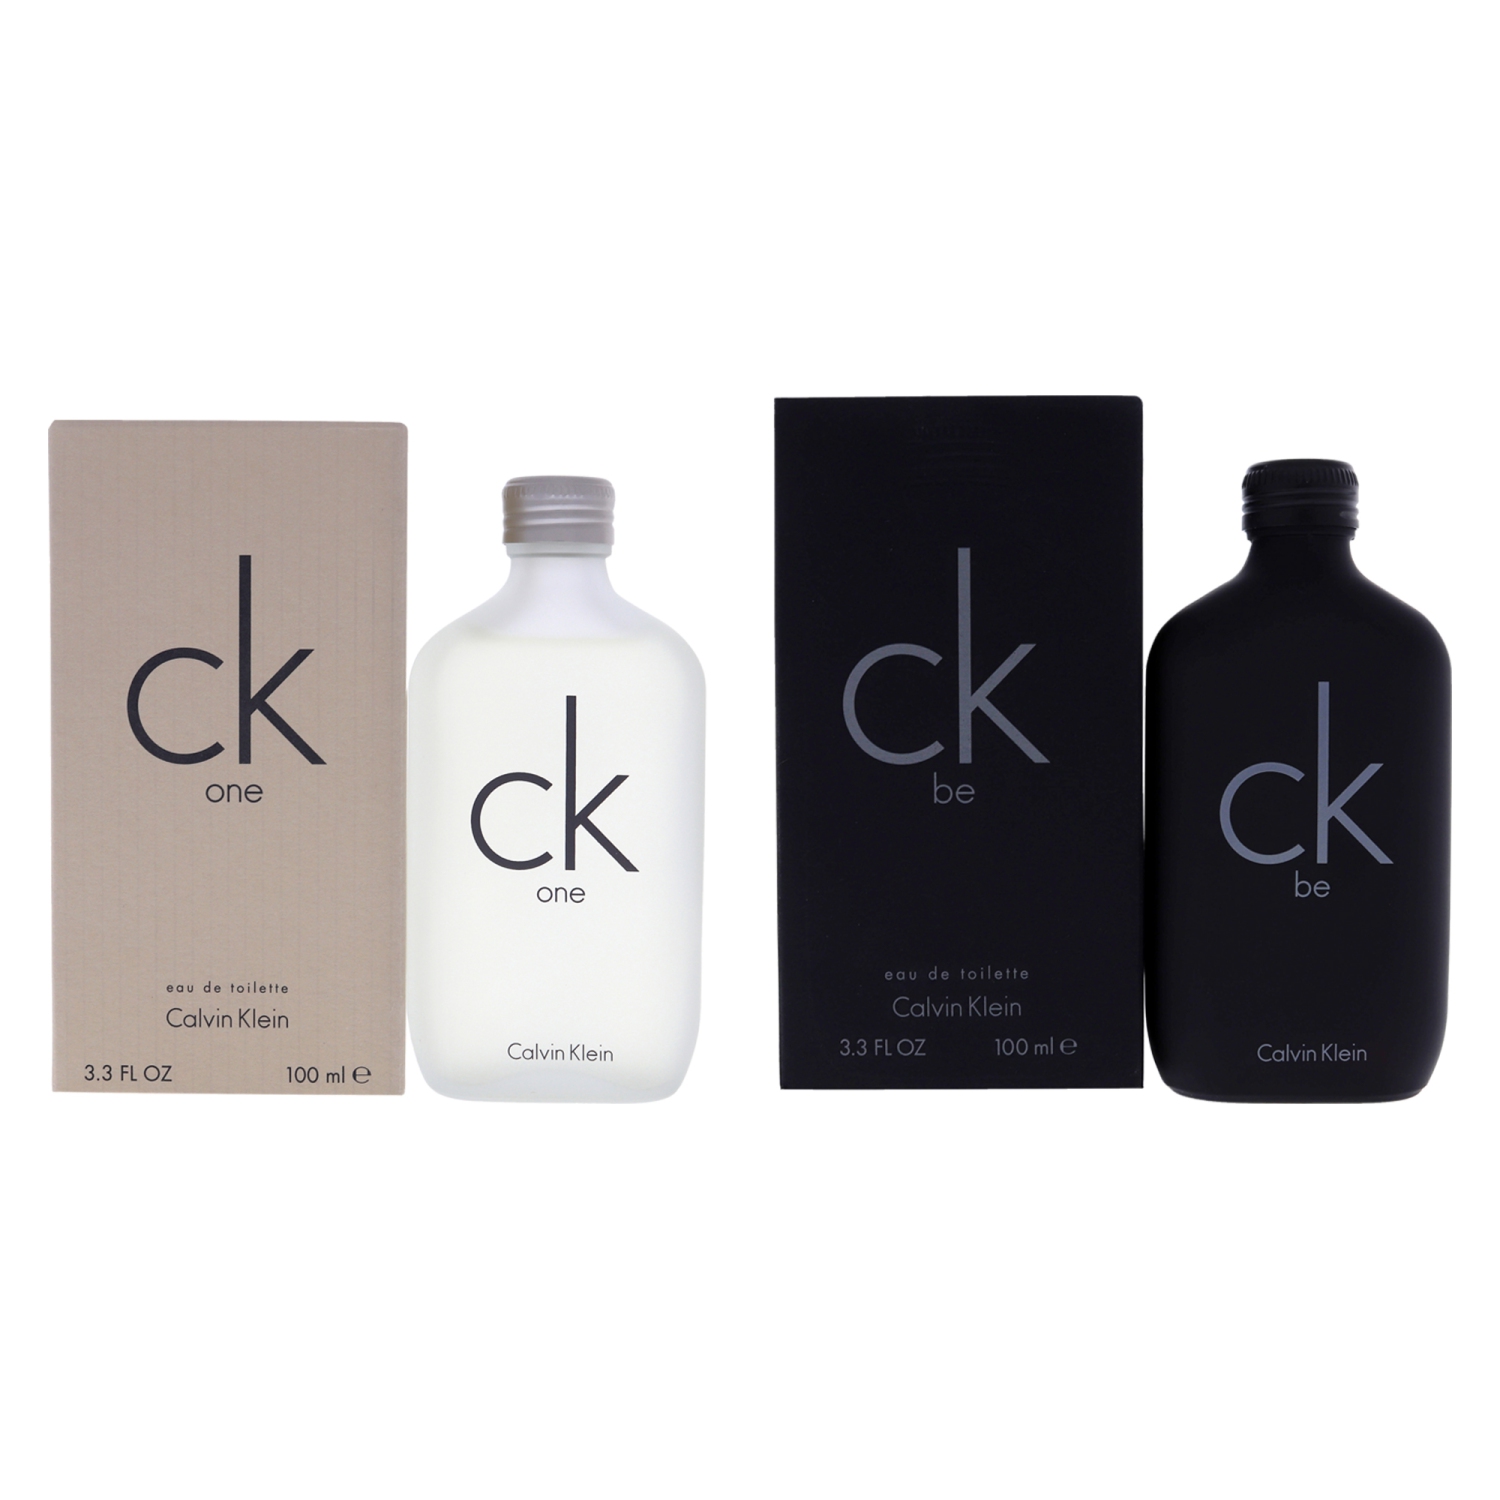 CK Kit by Calvin Klein for Unisex - 2 Pc Kit 3.4 oz EDT Spray CK One, 3.4oz CK Be EDT Spray